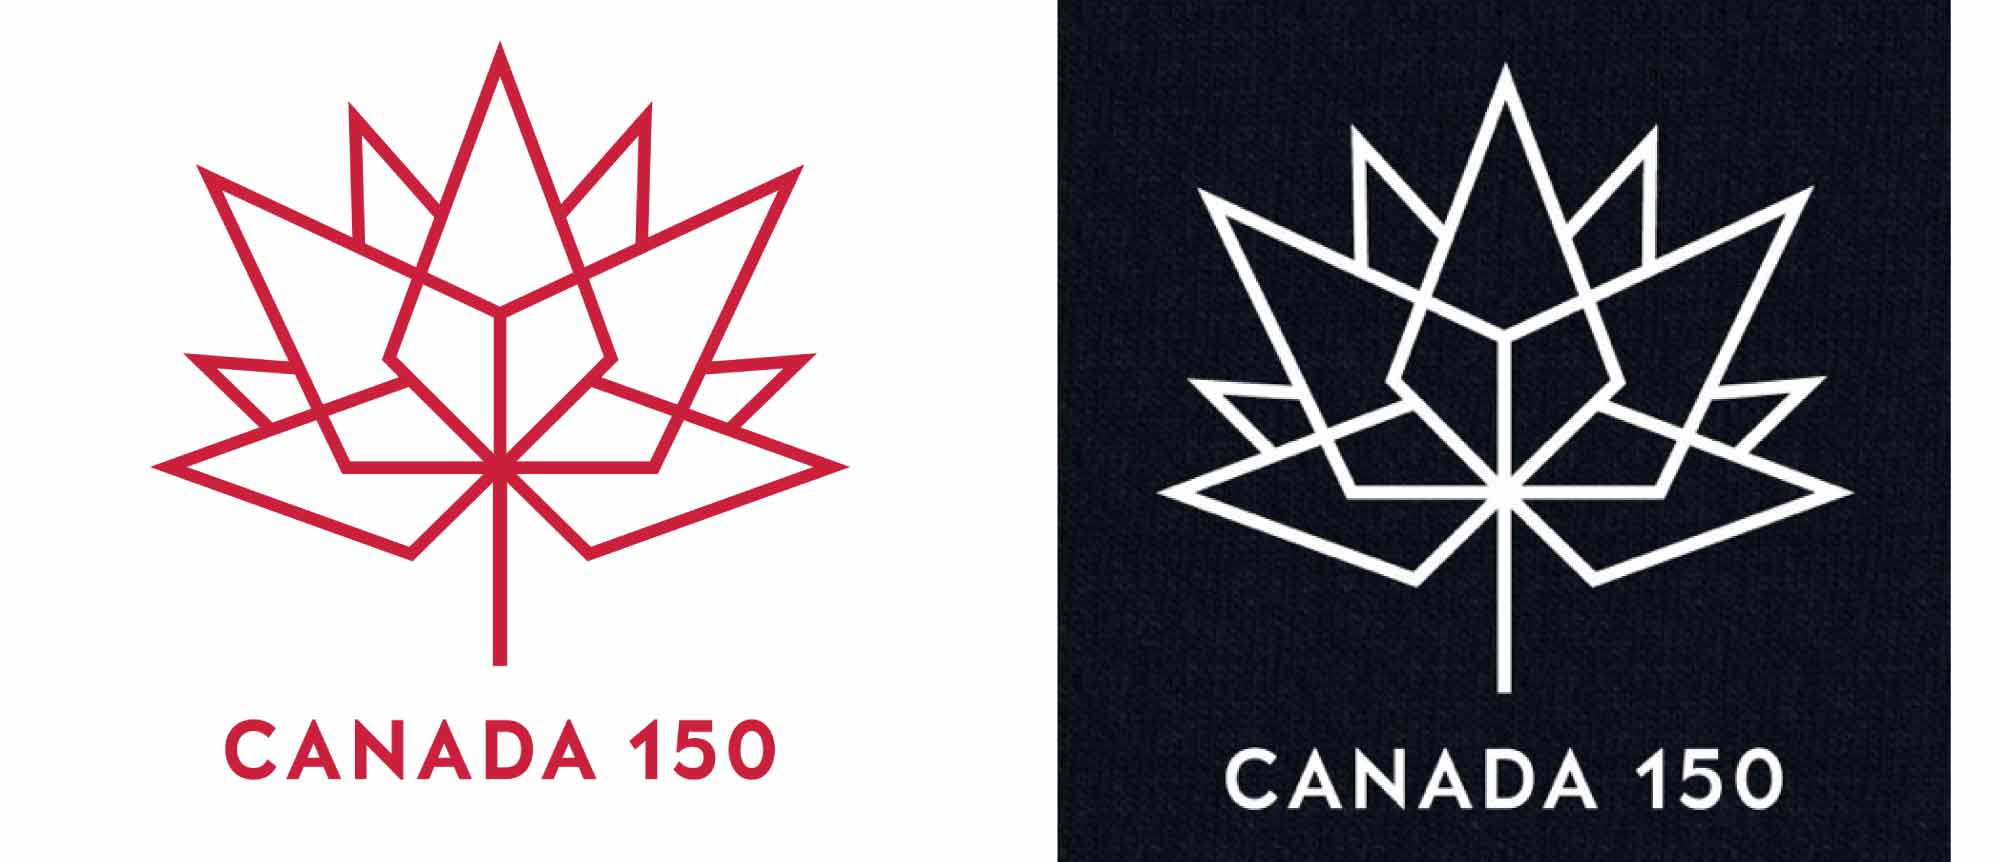 Canada Government Logo - Canada Celebrates with New Logo | Articles | LogoLounge